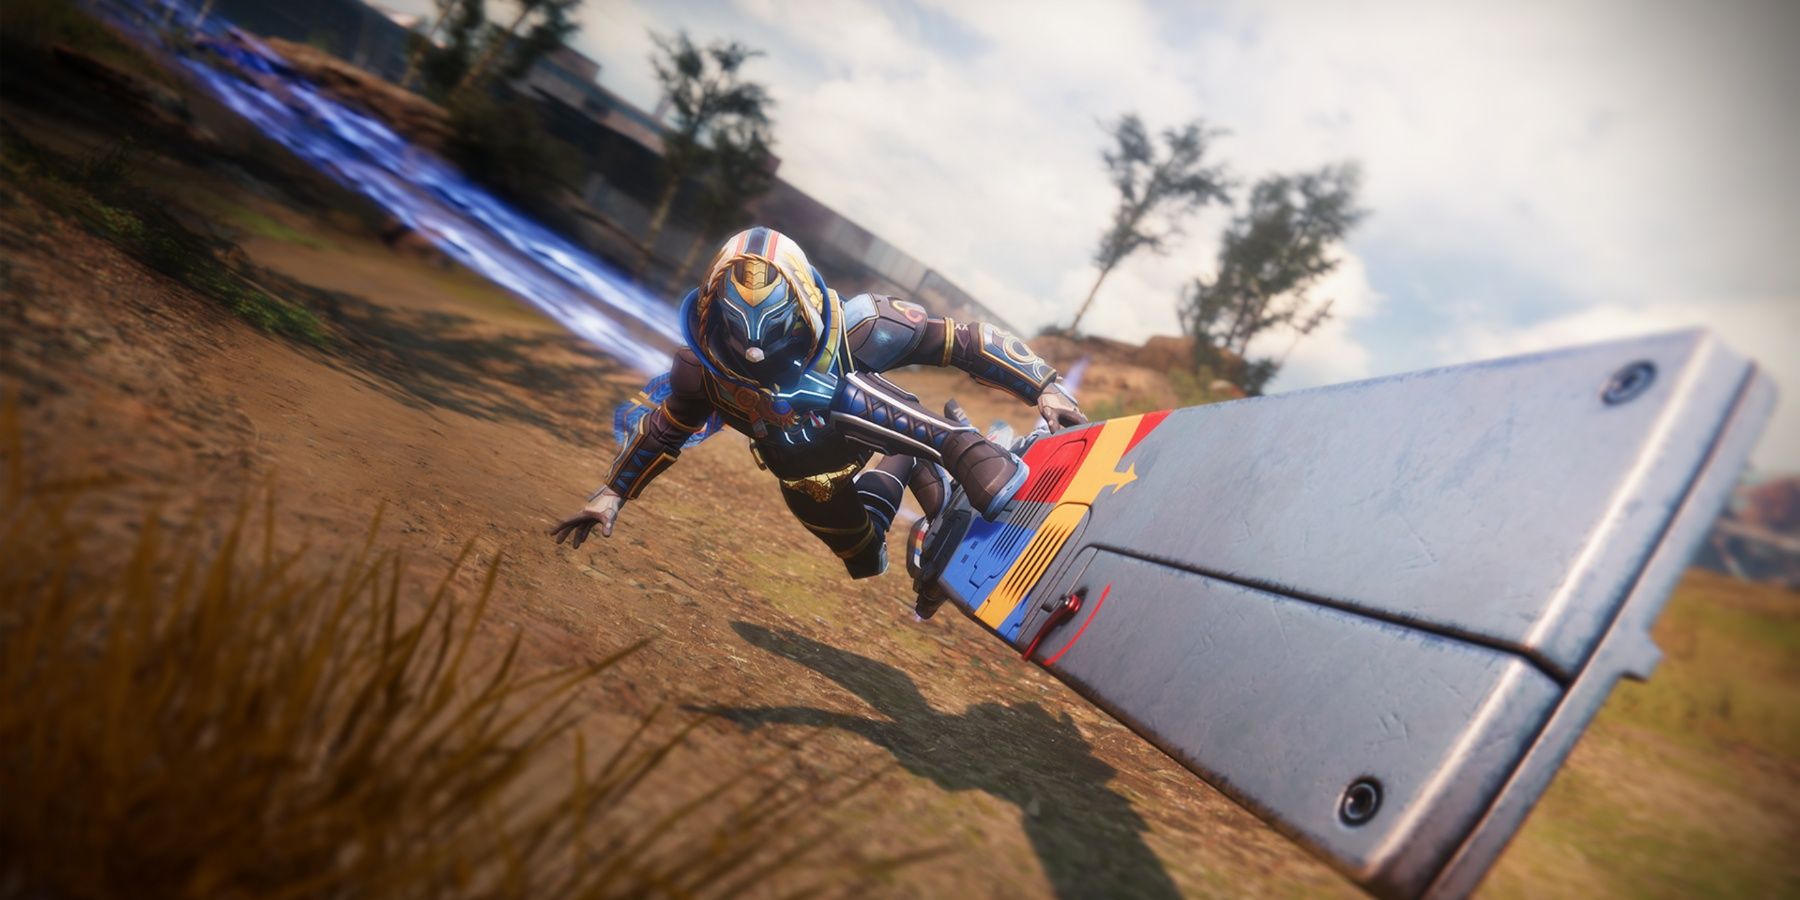 Hunter in Destiny 2 Riding on a Skimmer